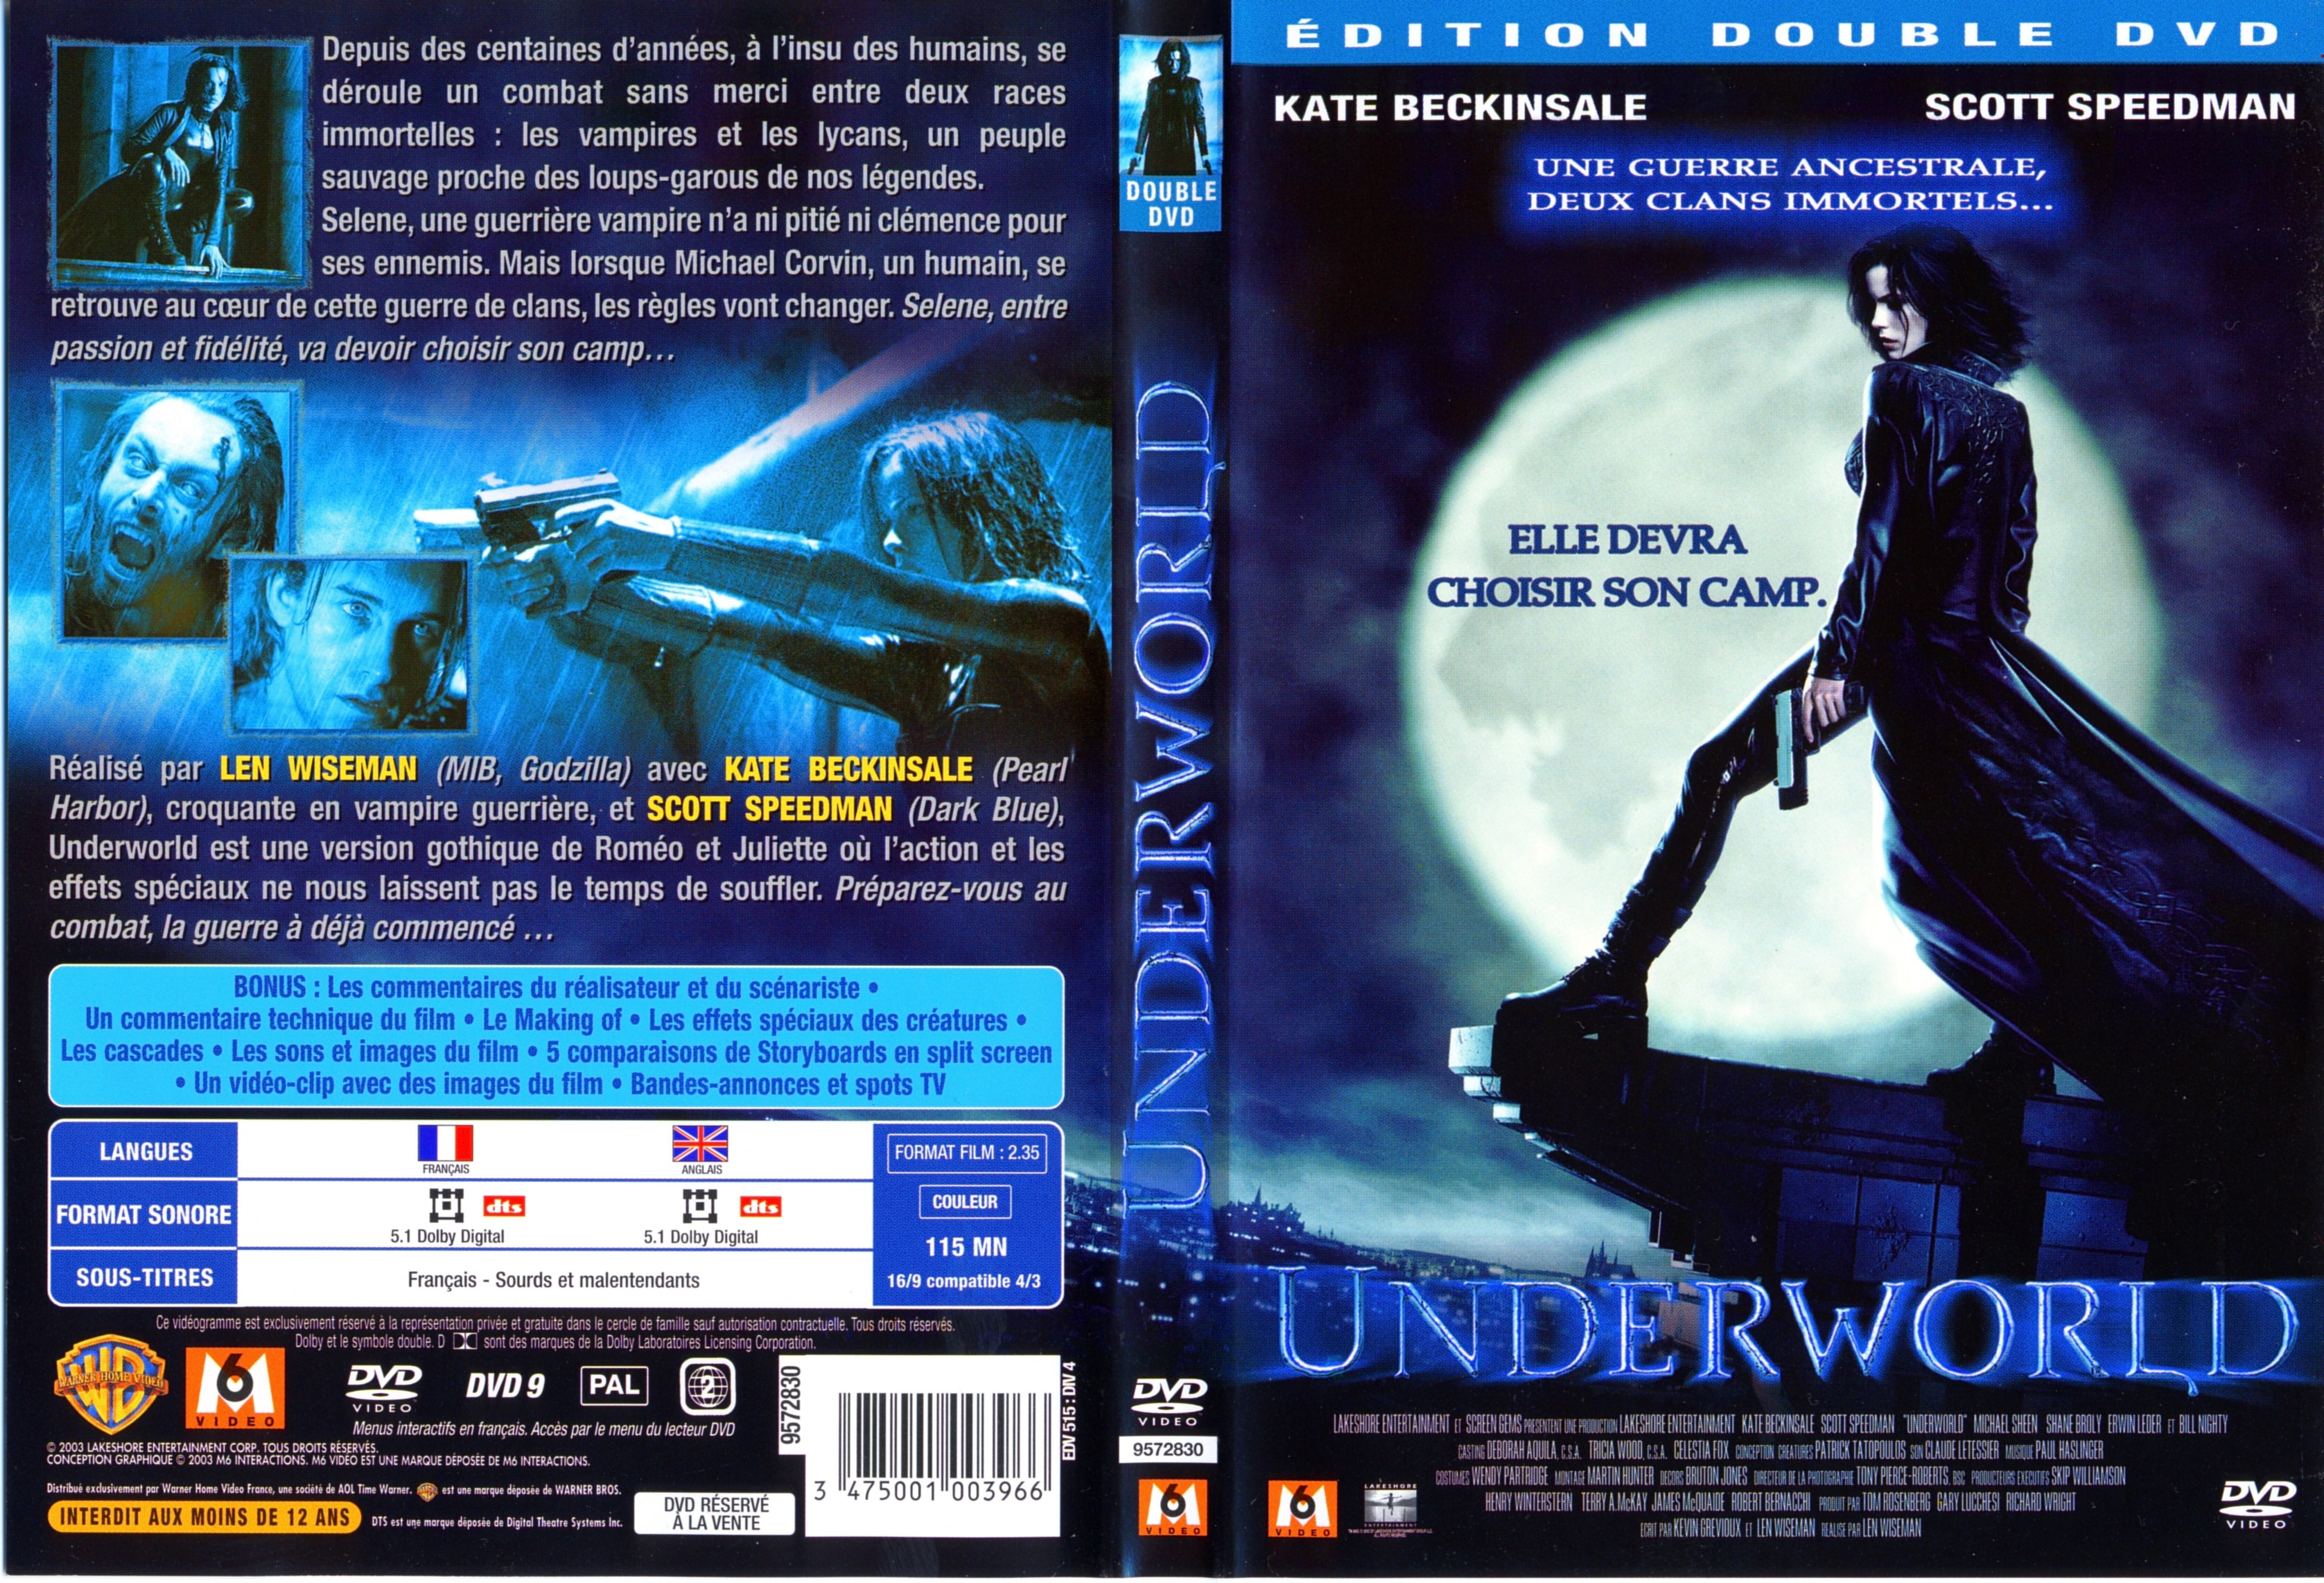 Jaquette DVD Underworld v2